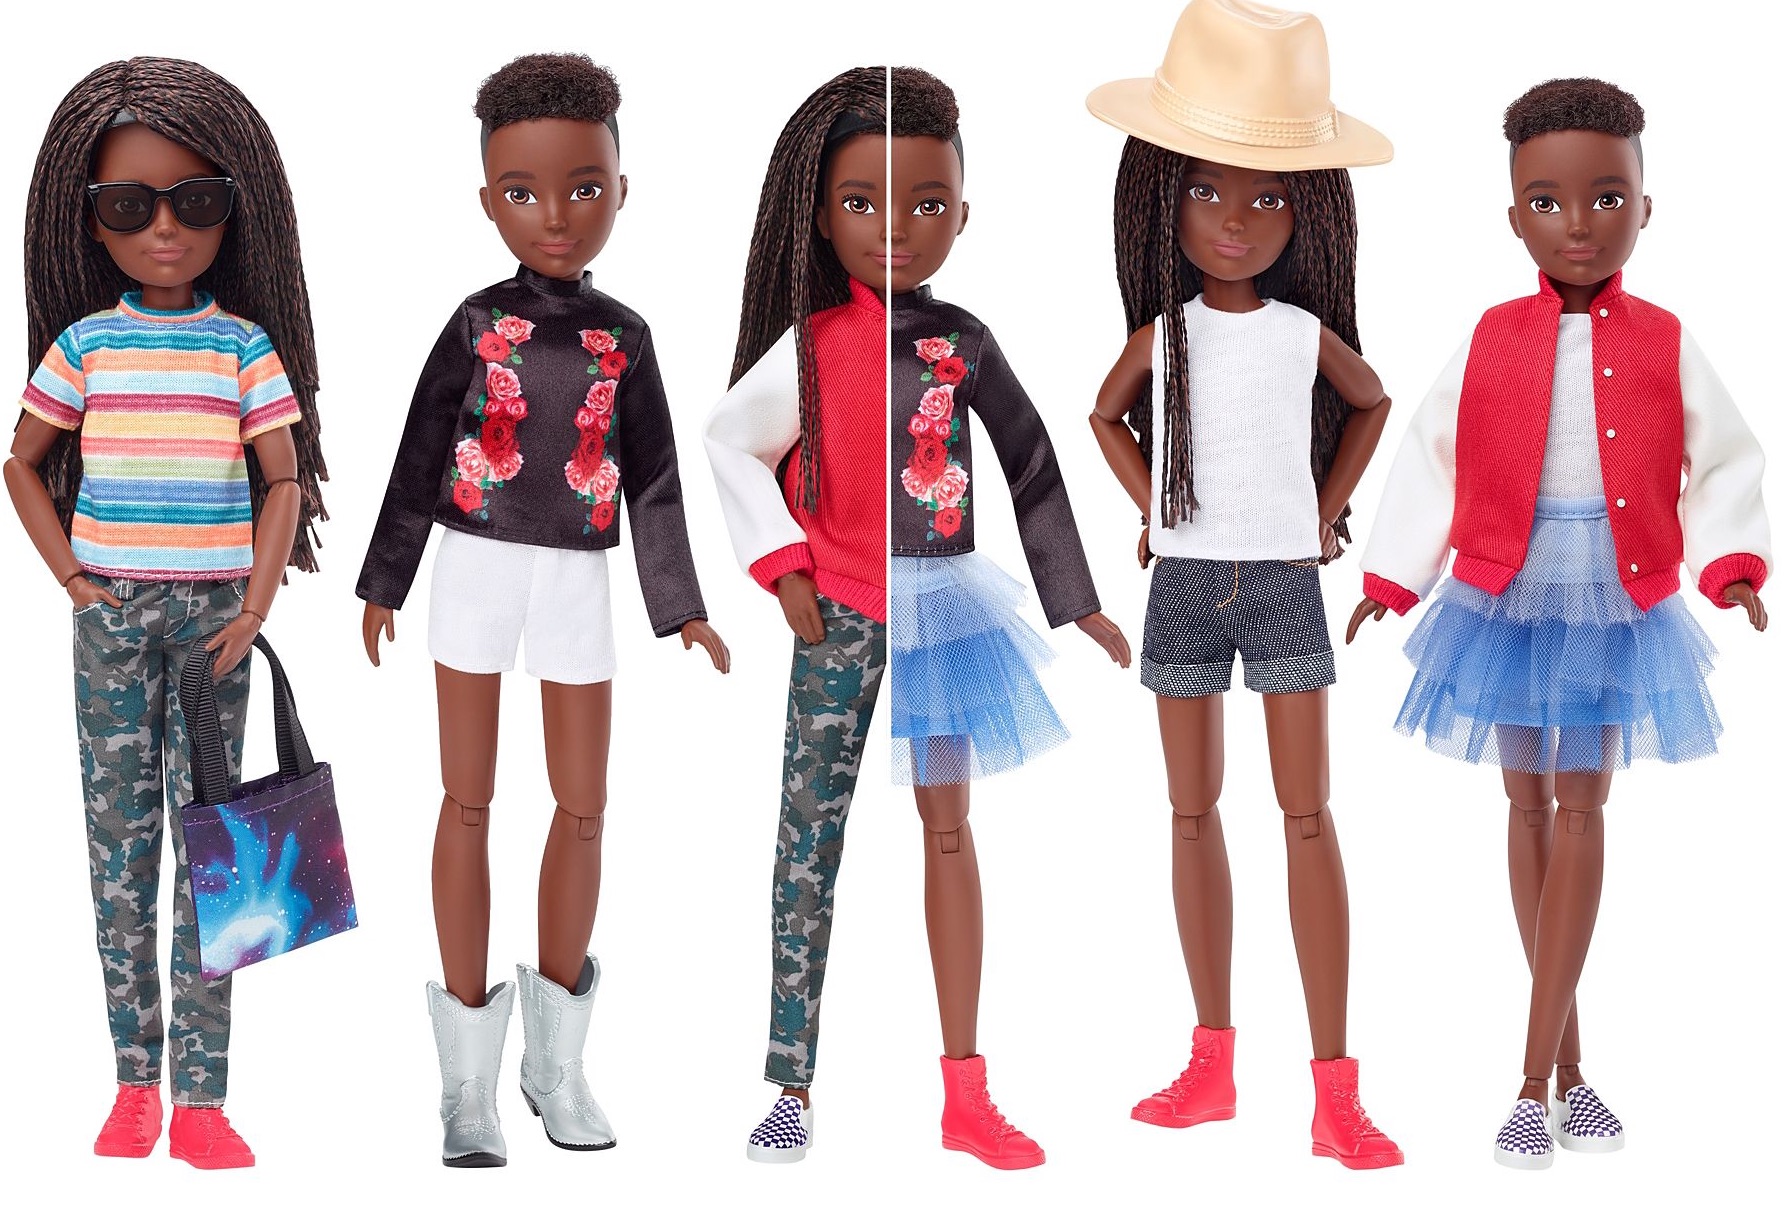 Mattel Releases Gender Neutral Dolls